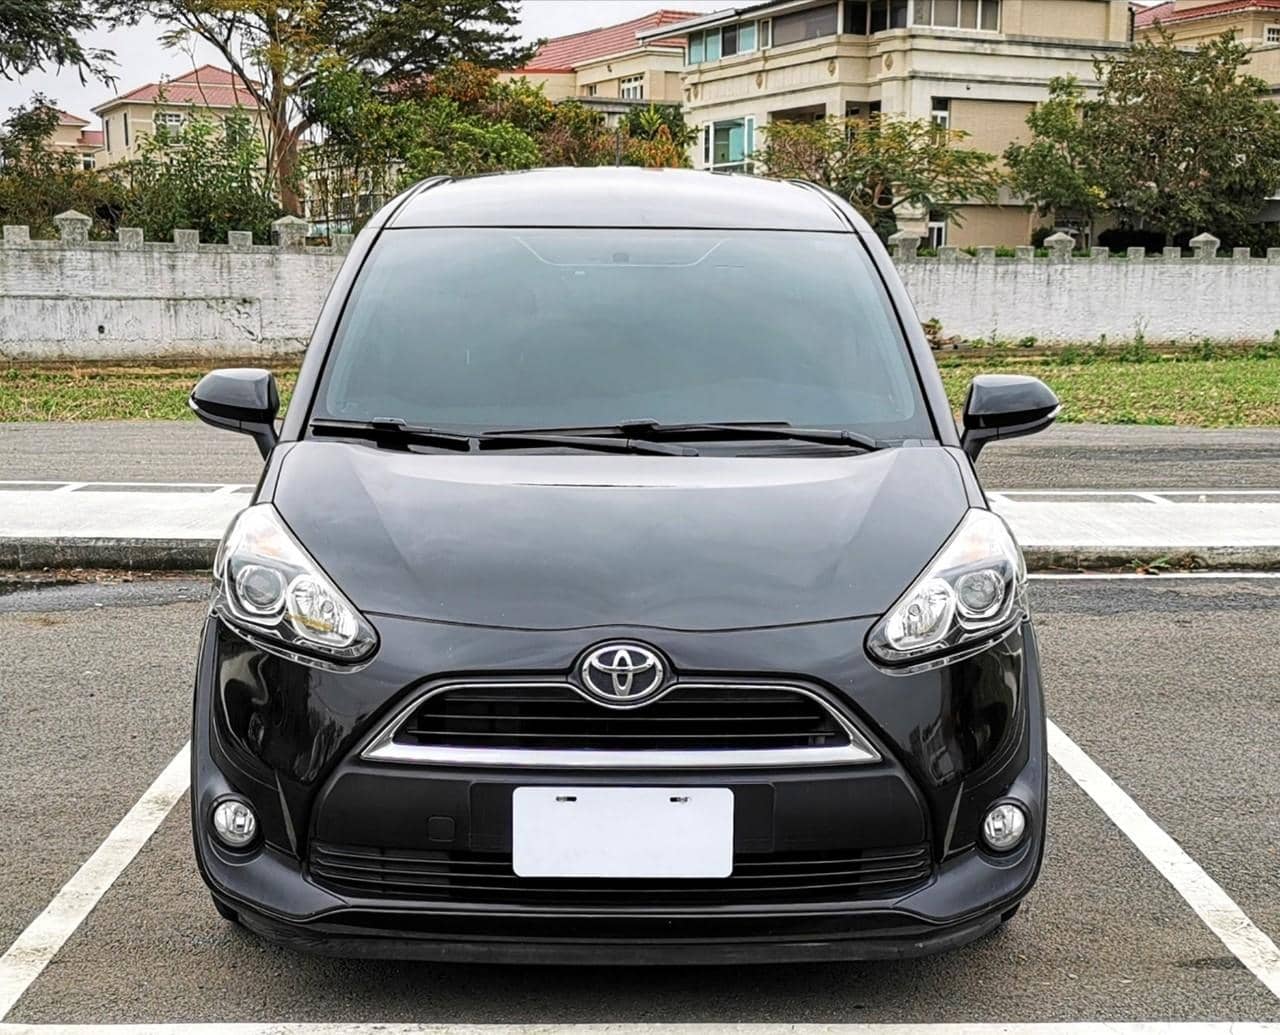 Toyota_usedcar_2018_Sienta 1.8_92164km_Toyota中古車_Sienta_圖片